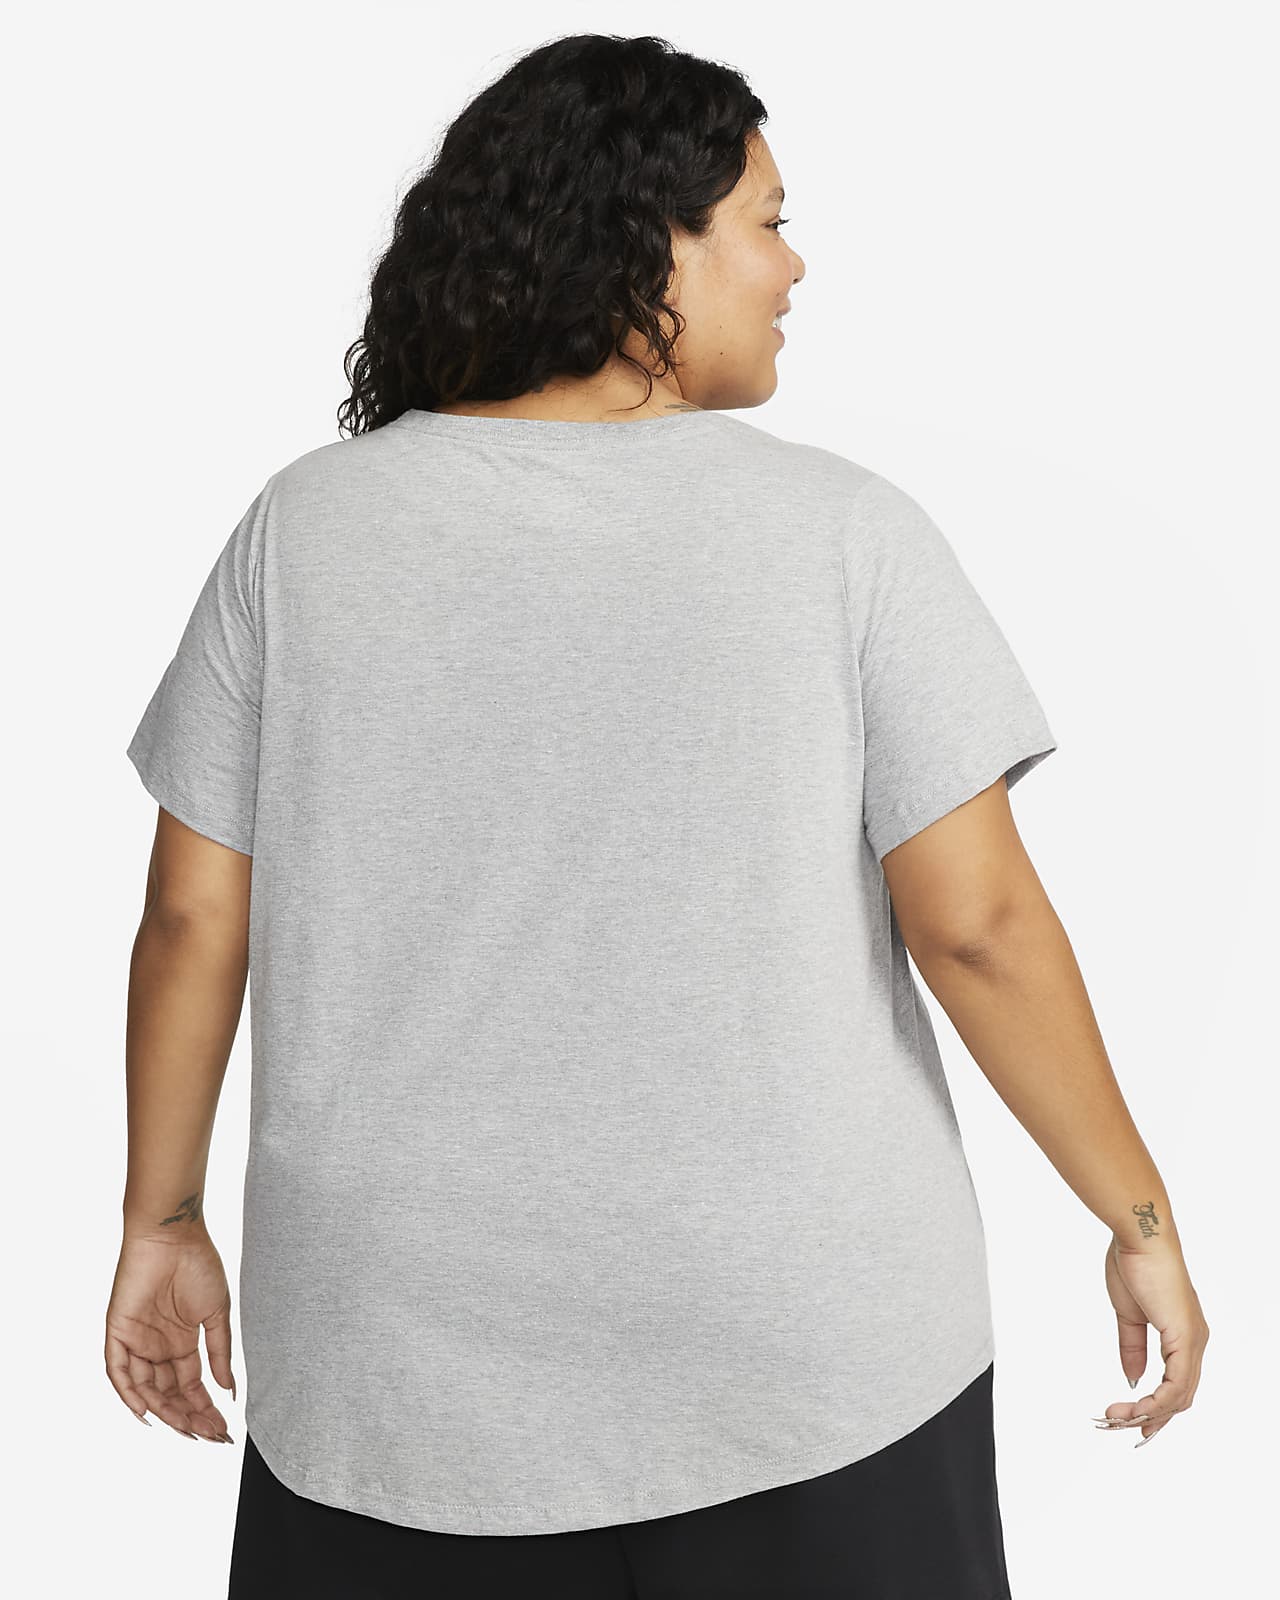 Tee-shirt Nike Sportswear pour Femme (grande taille)